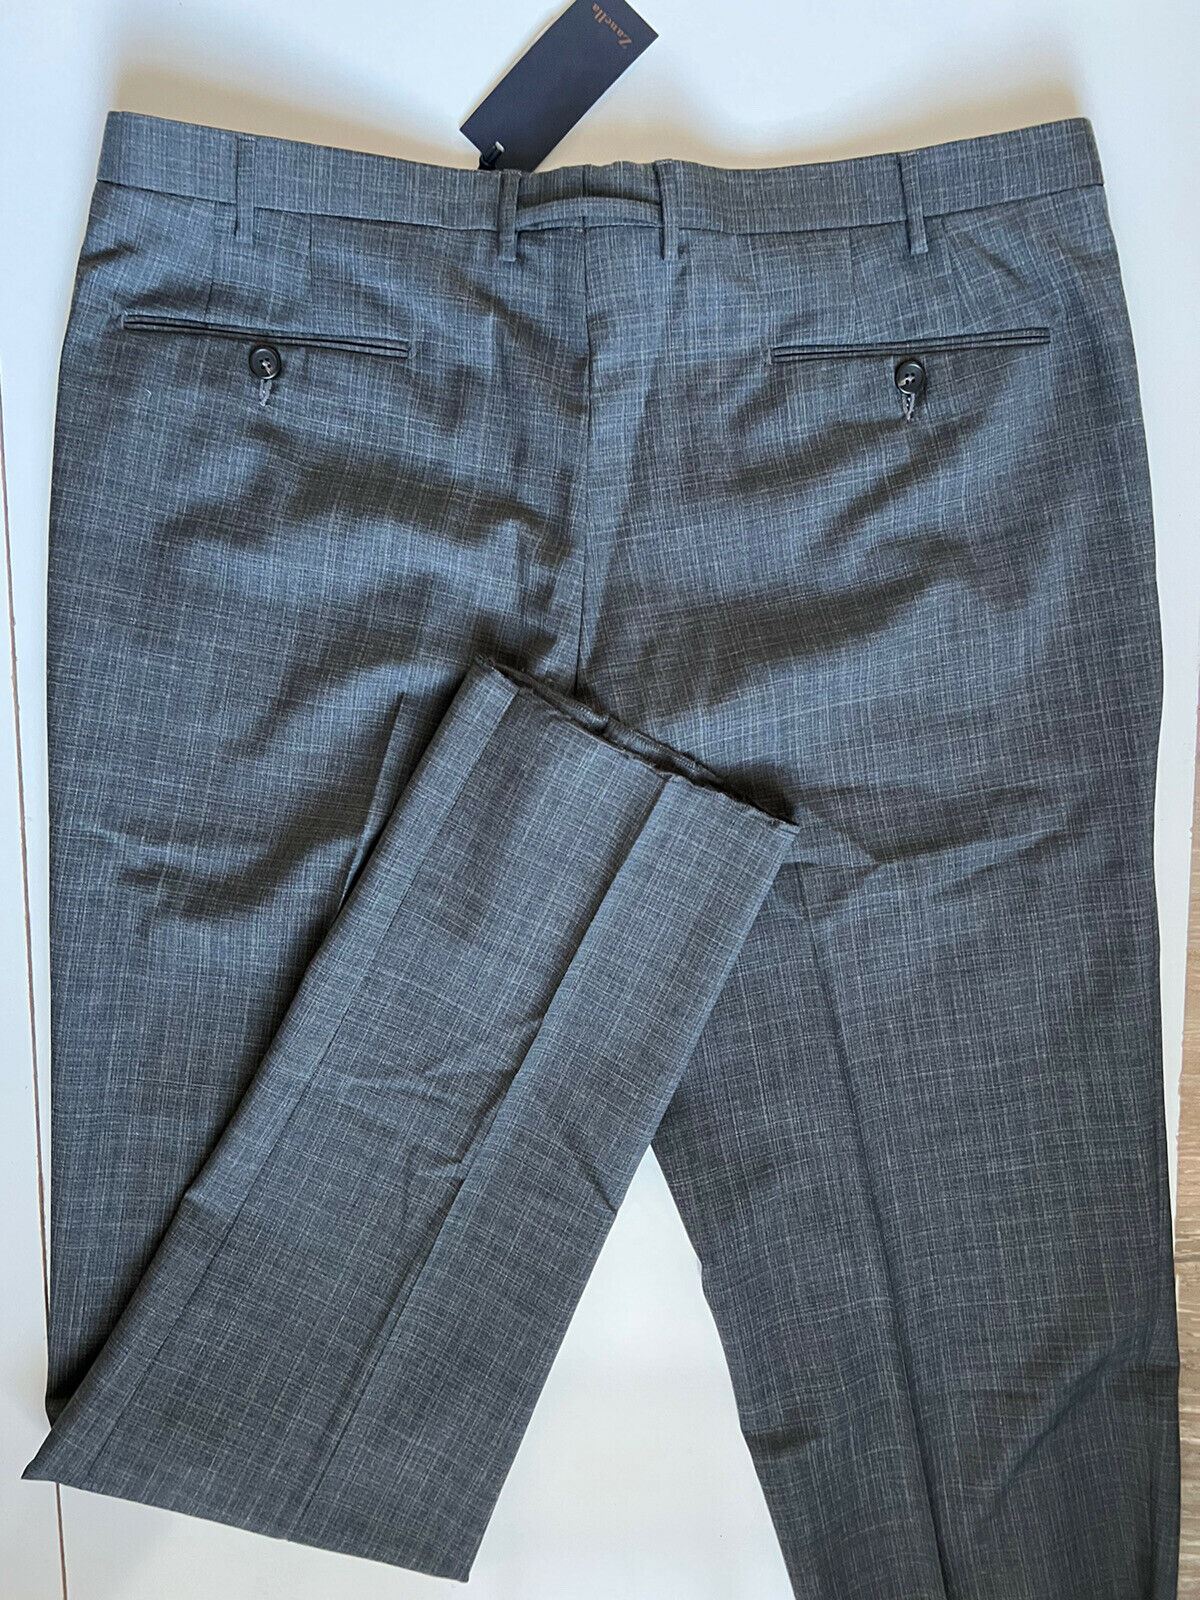 New $375 Zanella Men's Wool Dress Pants Gray 38 US ( 54 Eu ) Made in Italy